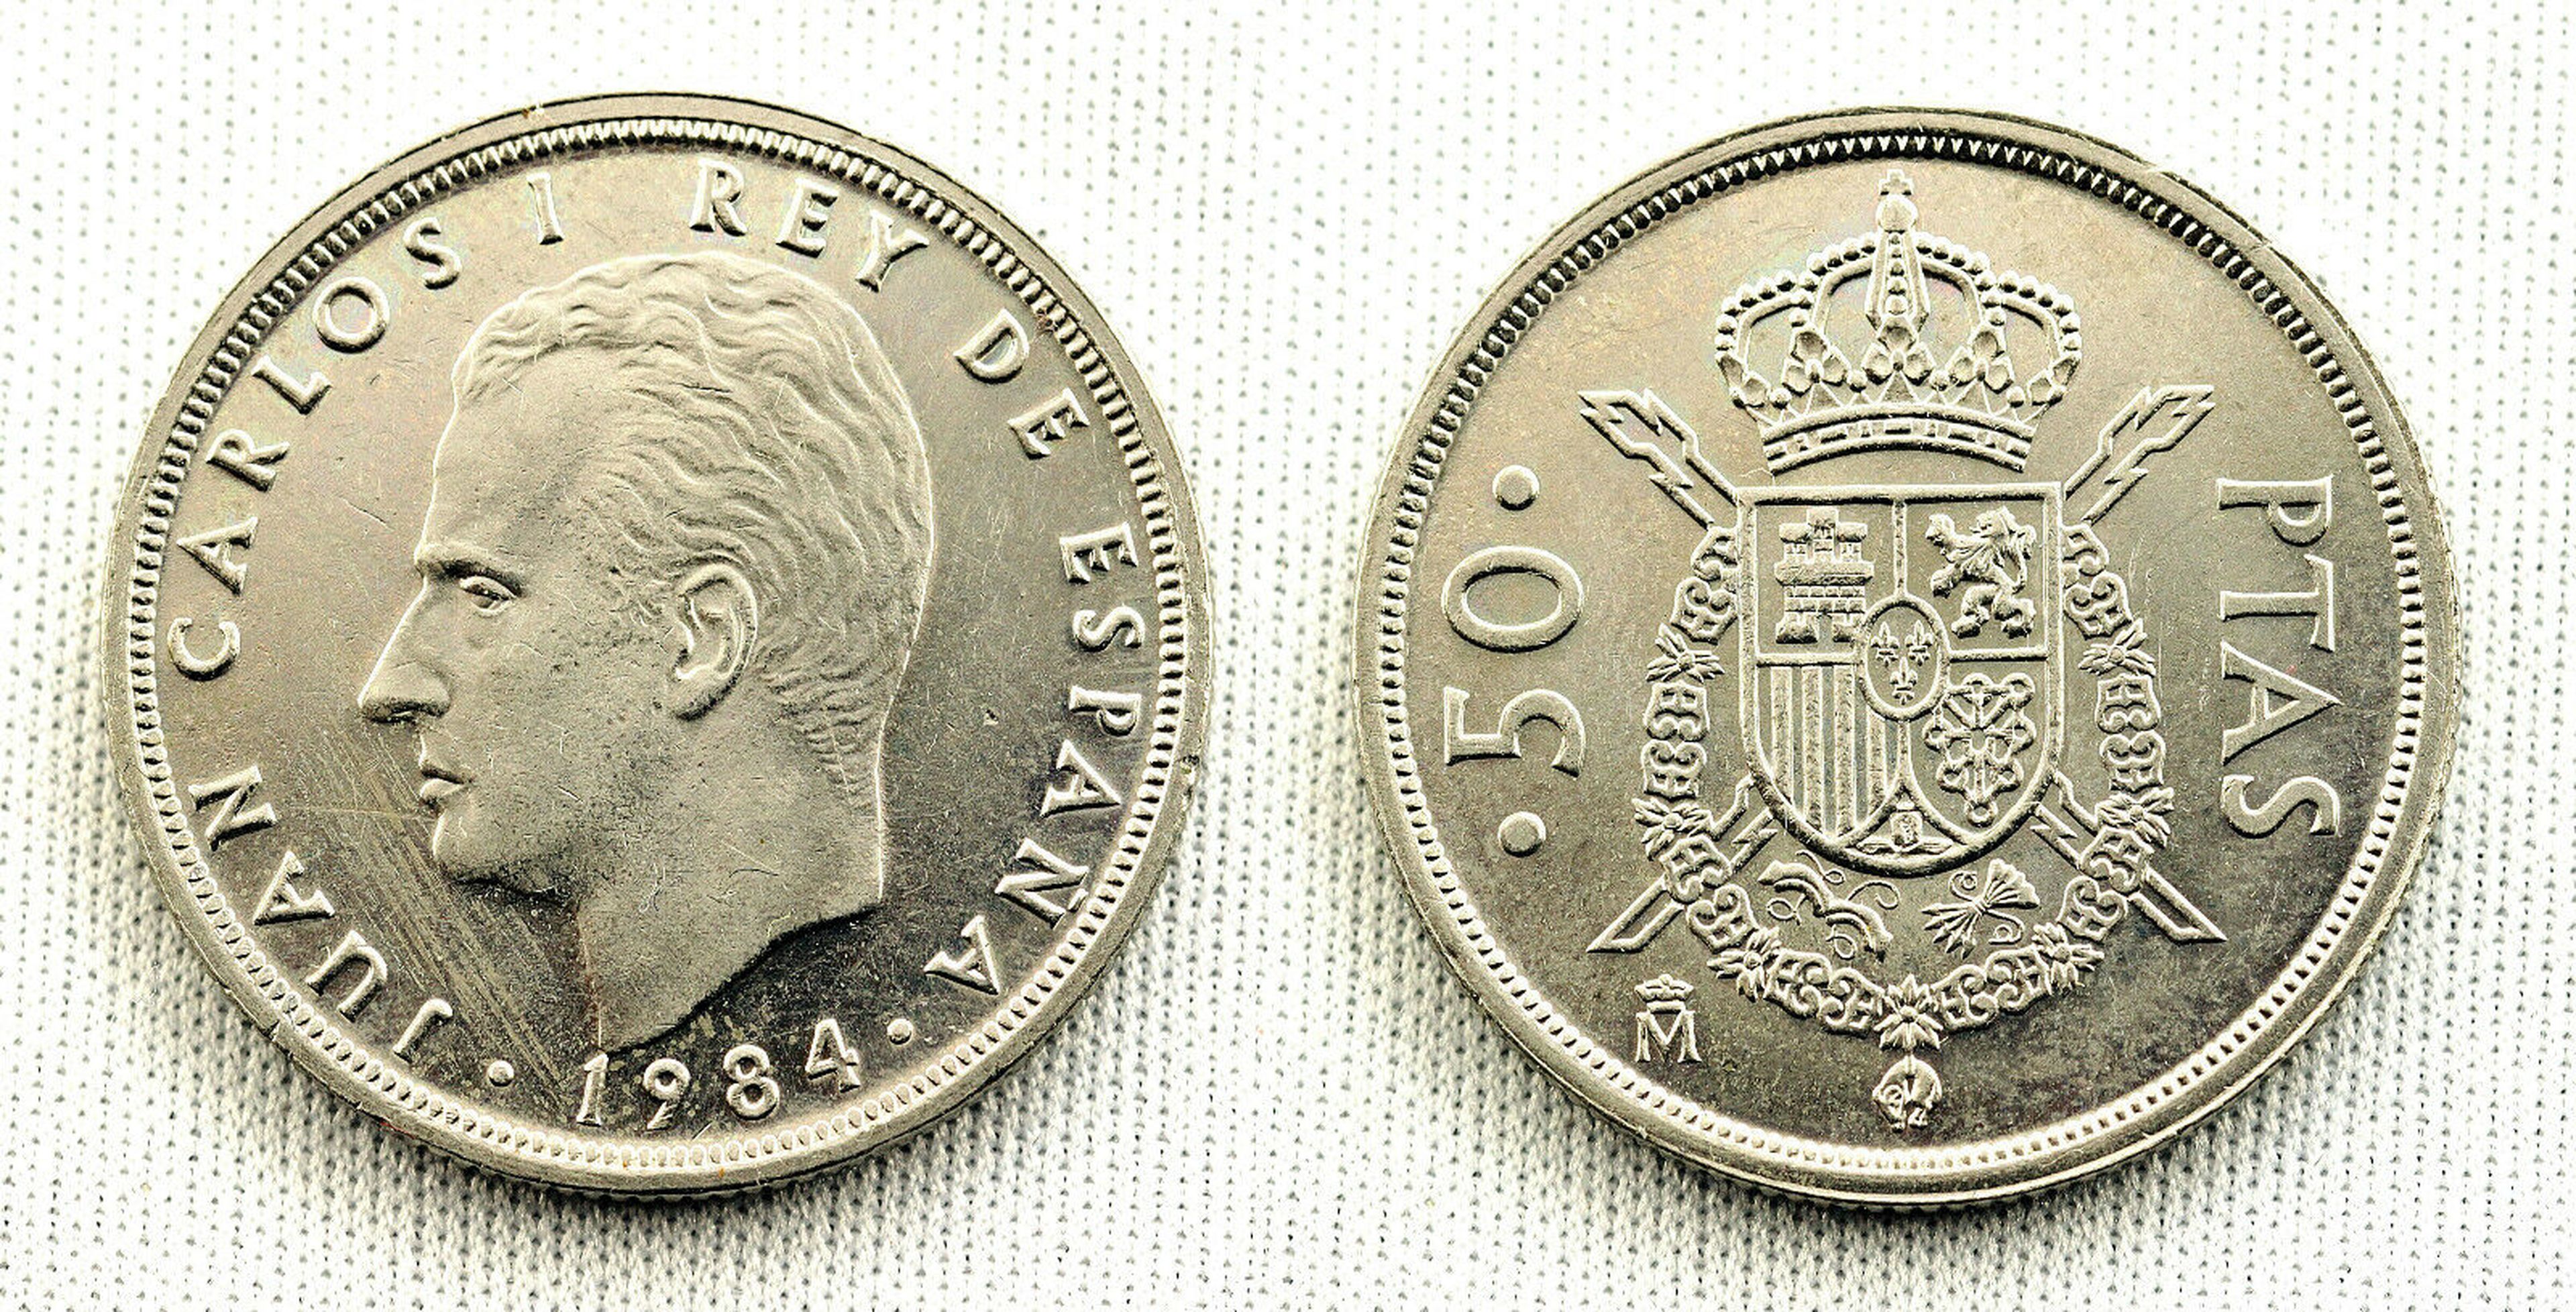 50 pesetas de 1984